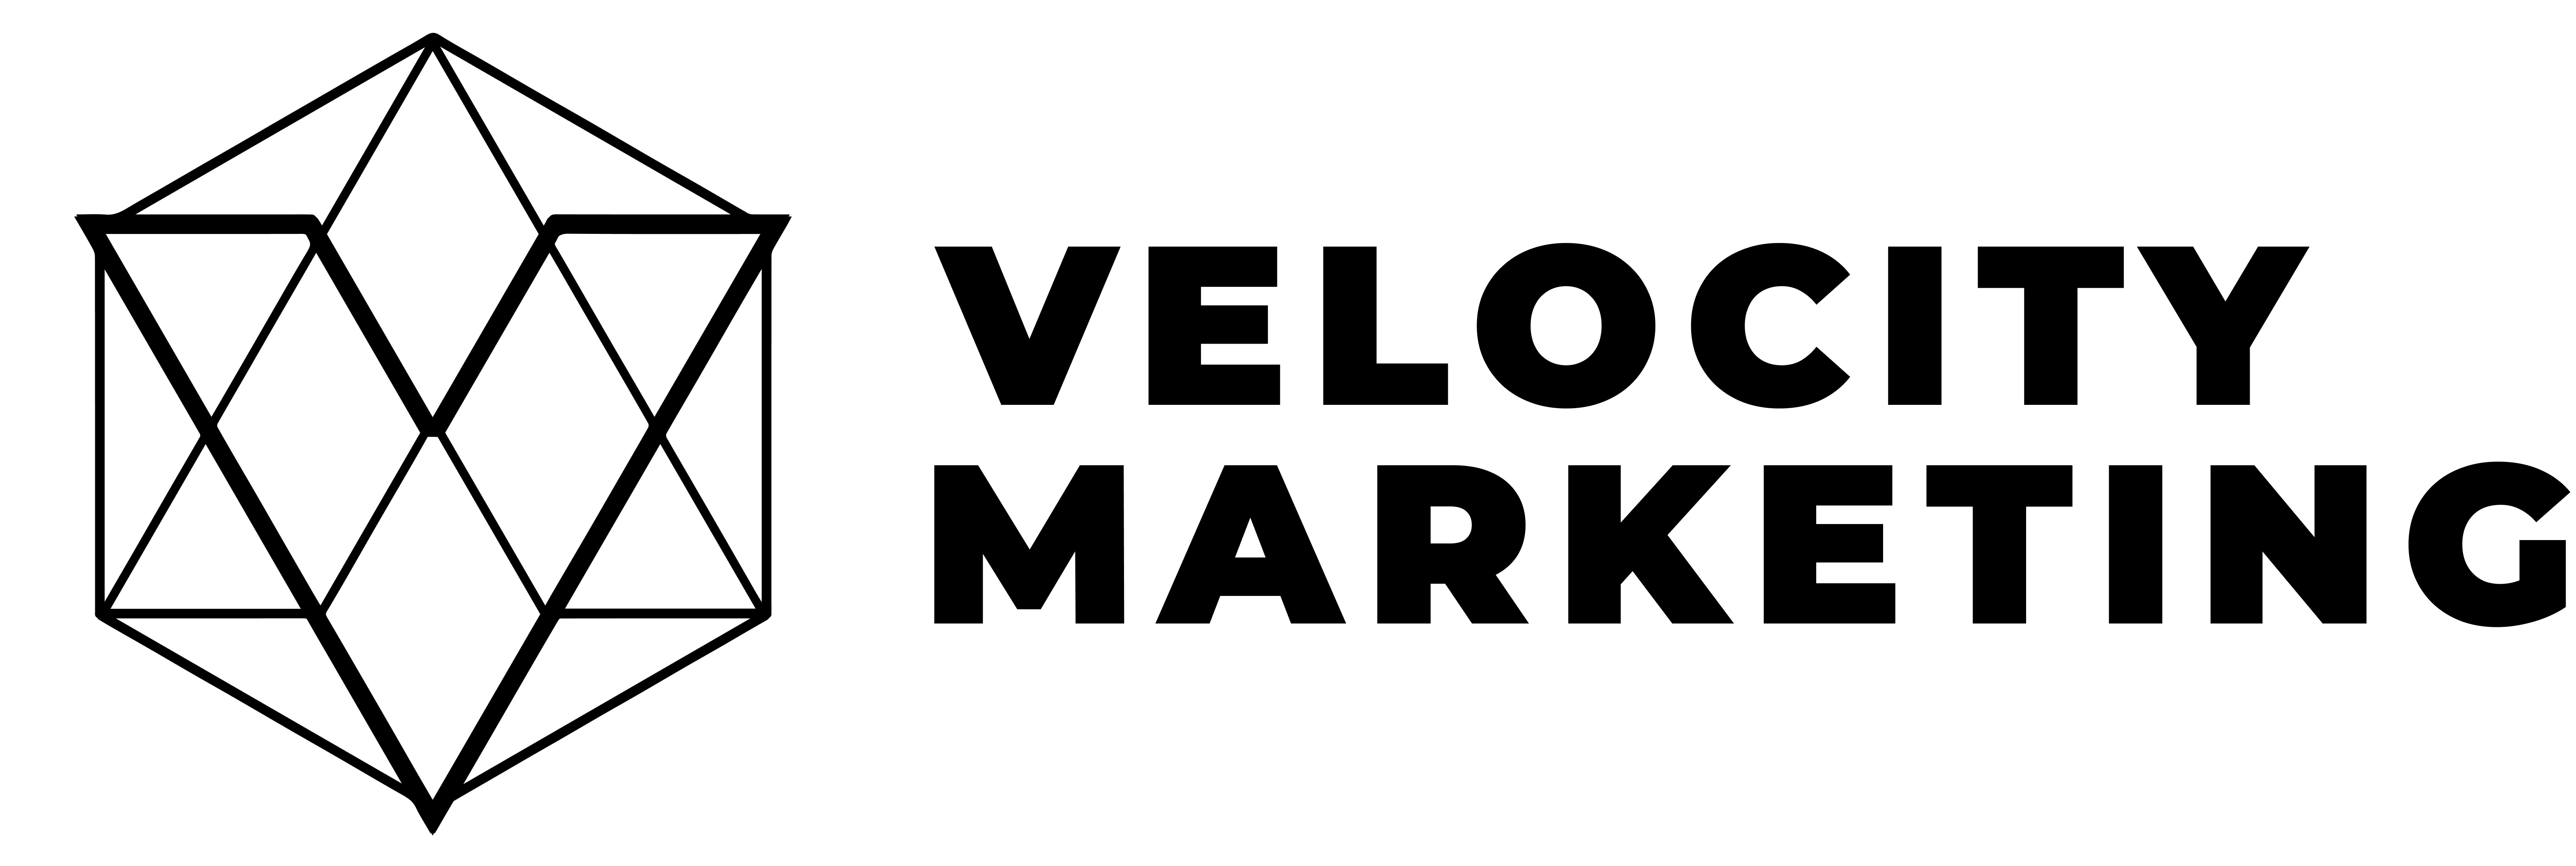 Velocity Marketing Logo